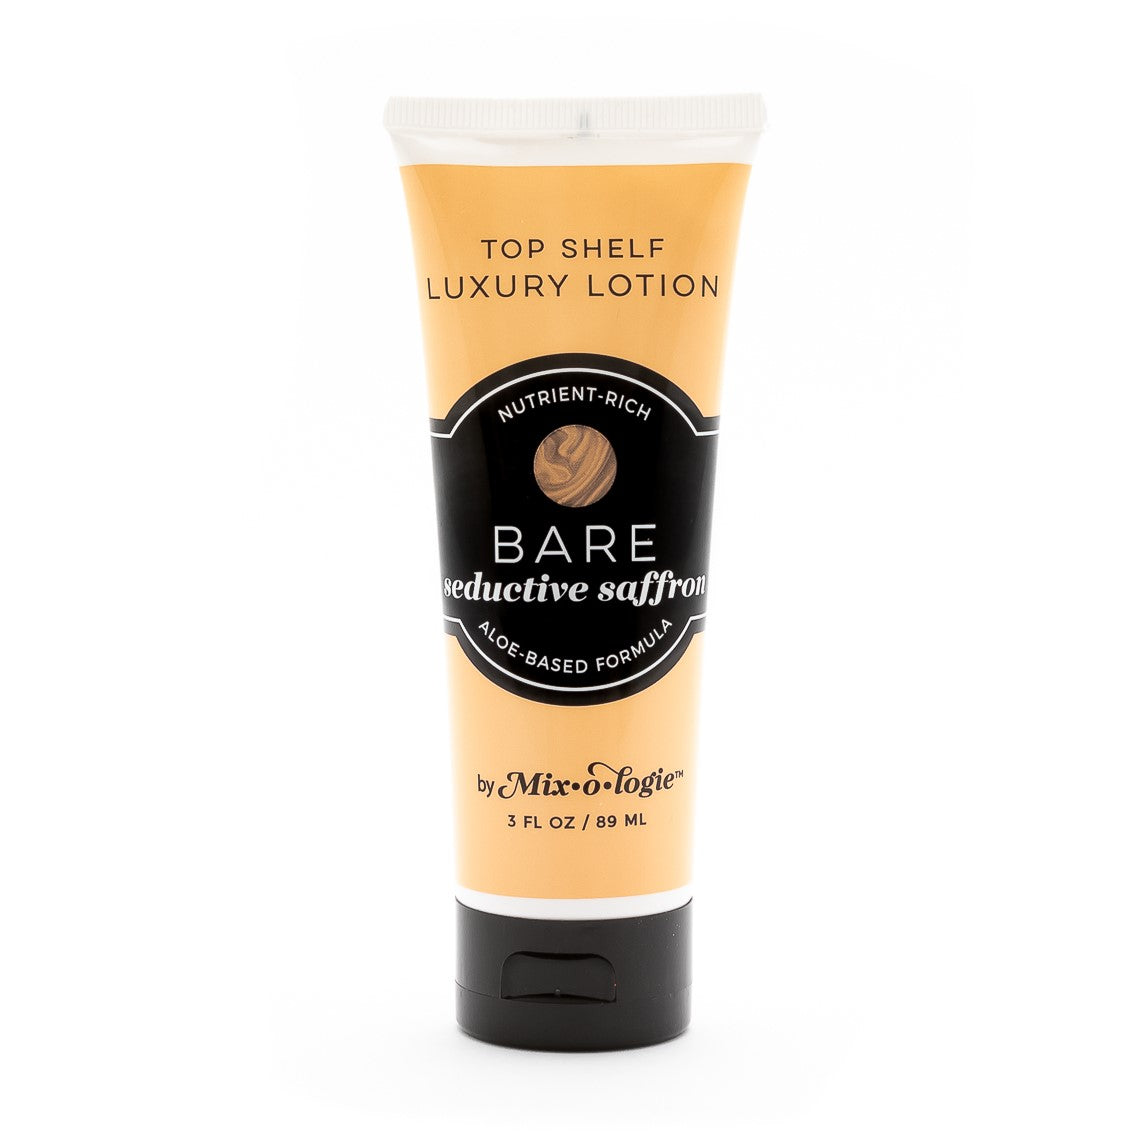 Bare (seductive saffron) - Top Shelf Luxury Lotion